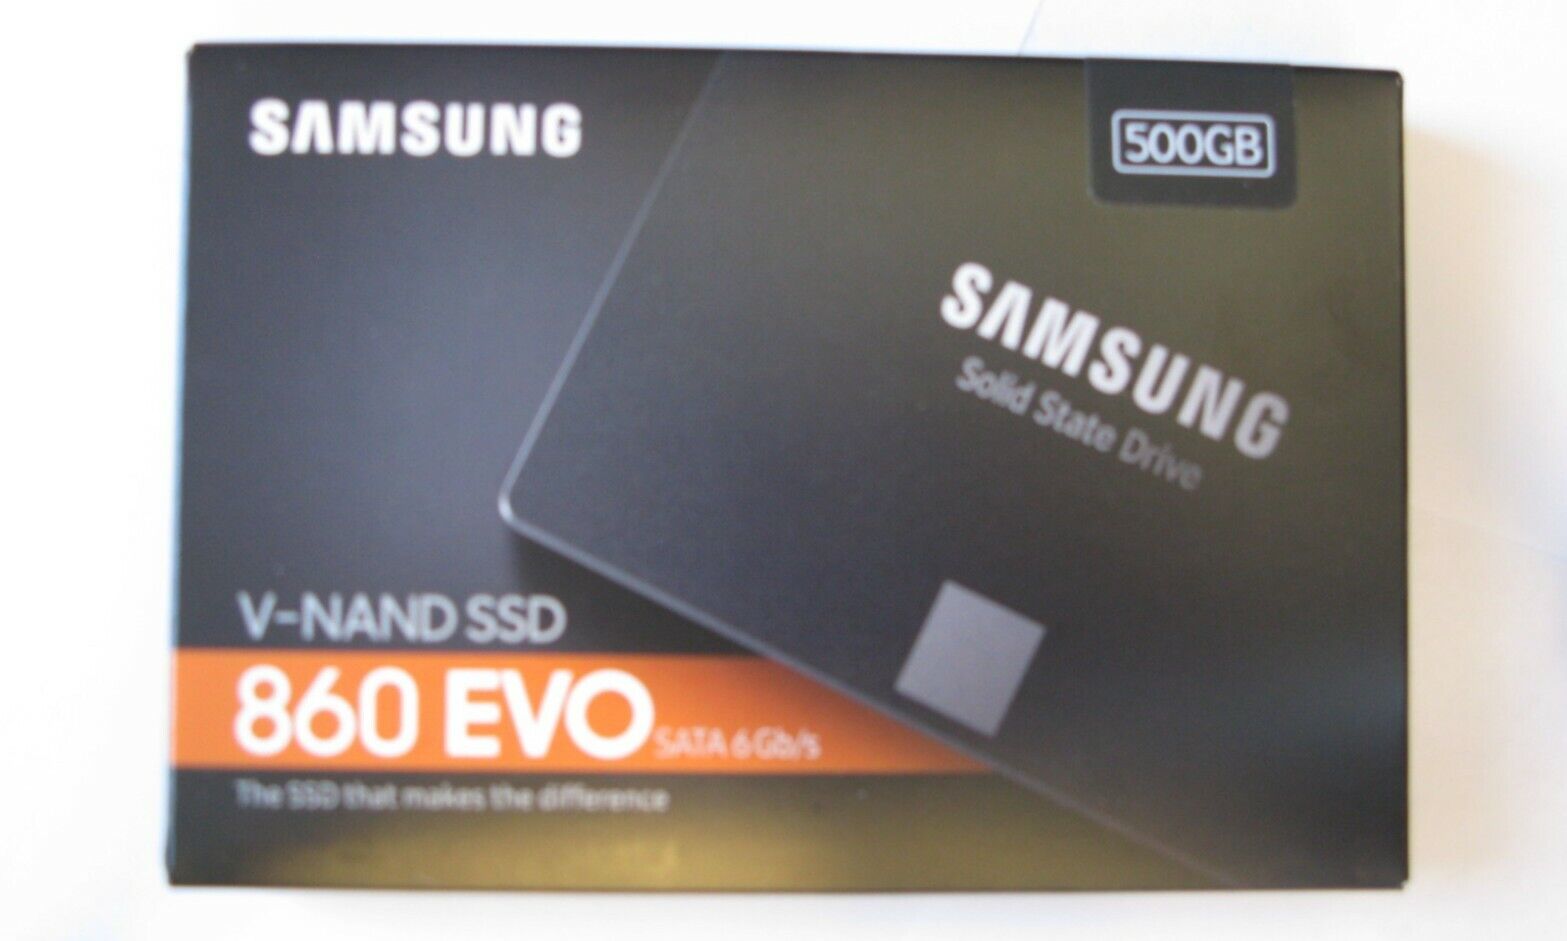 Samsung 860 EVO 500GB Internal SSD 2.5 inch (MZ76E500BAM) Solid State Drive